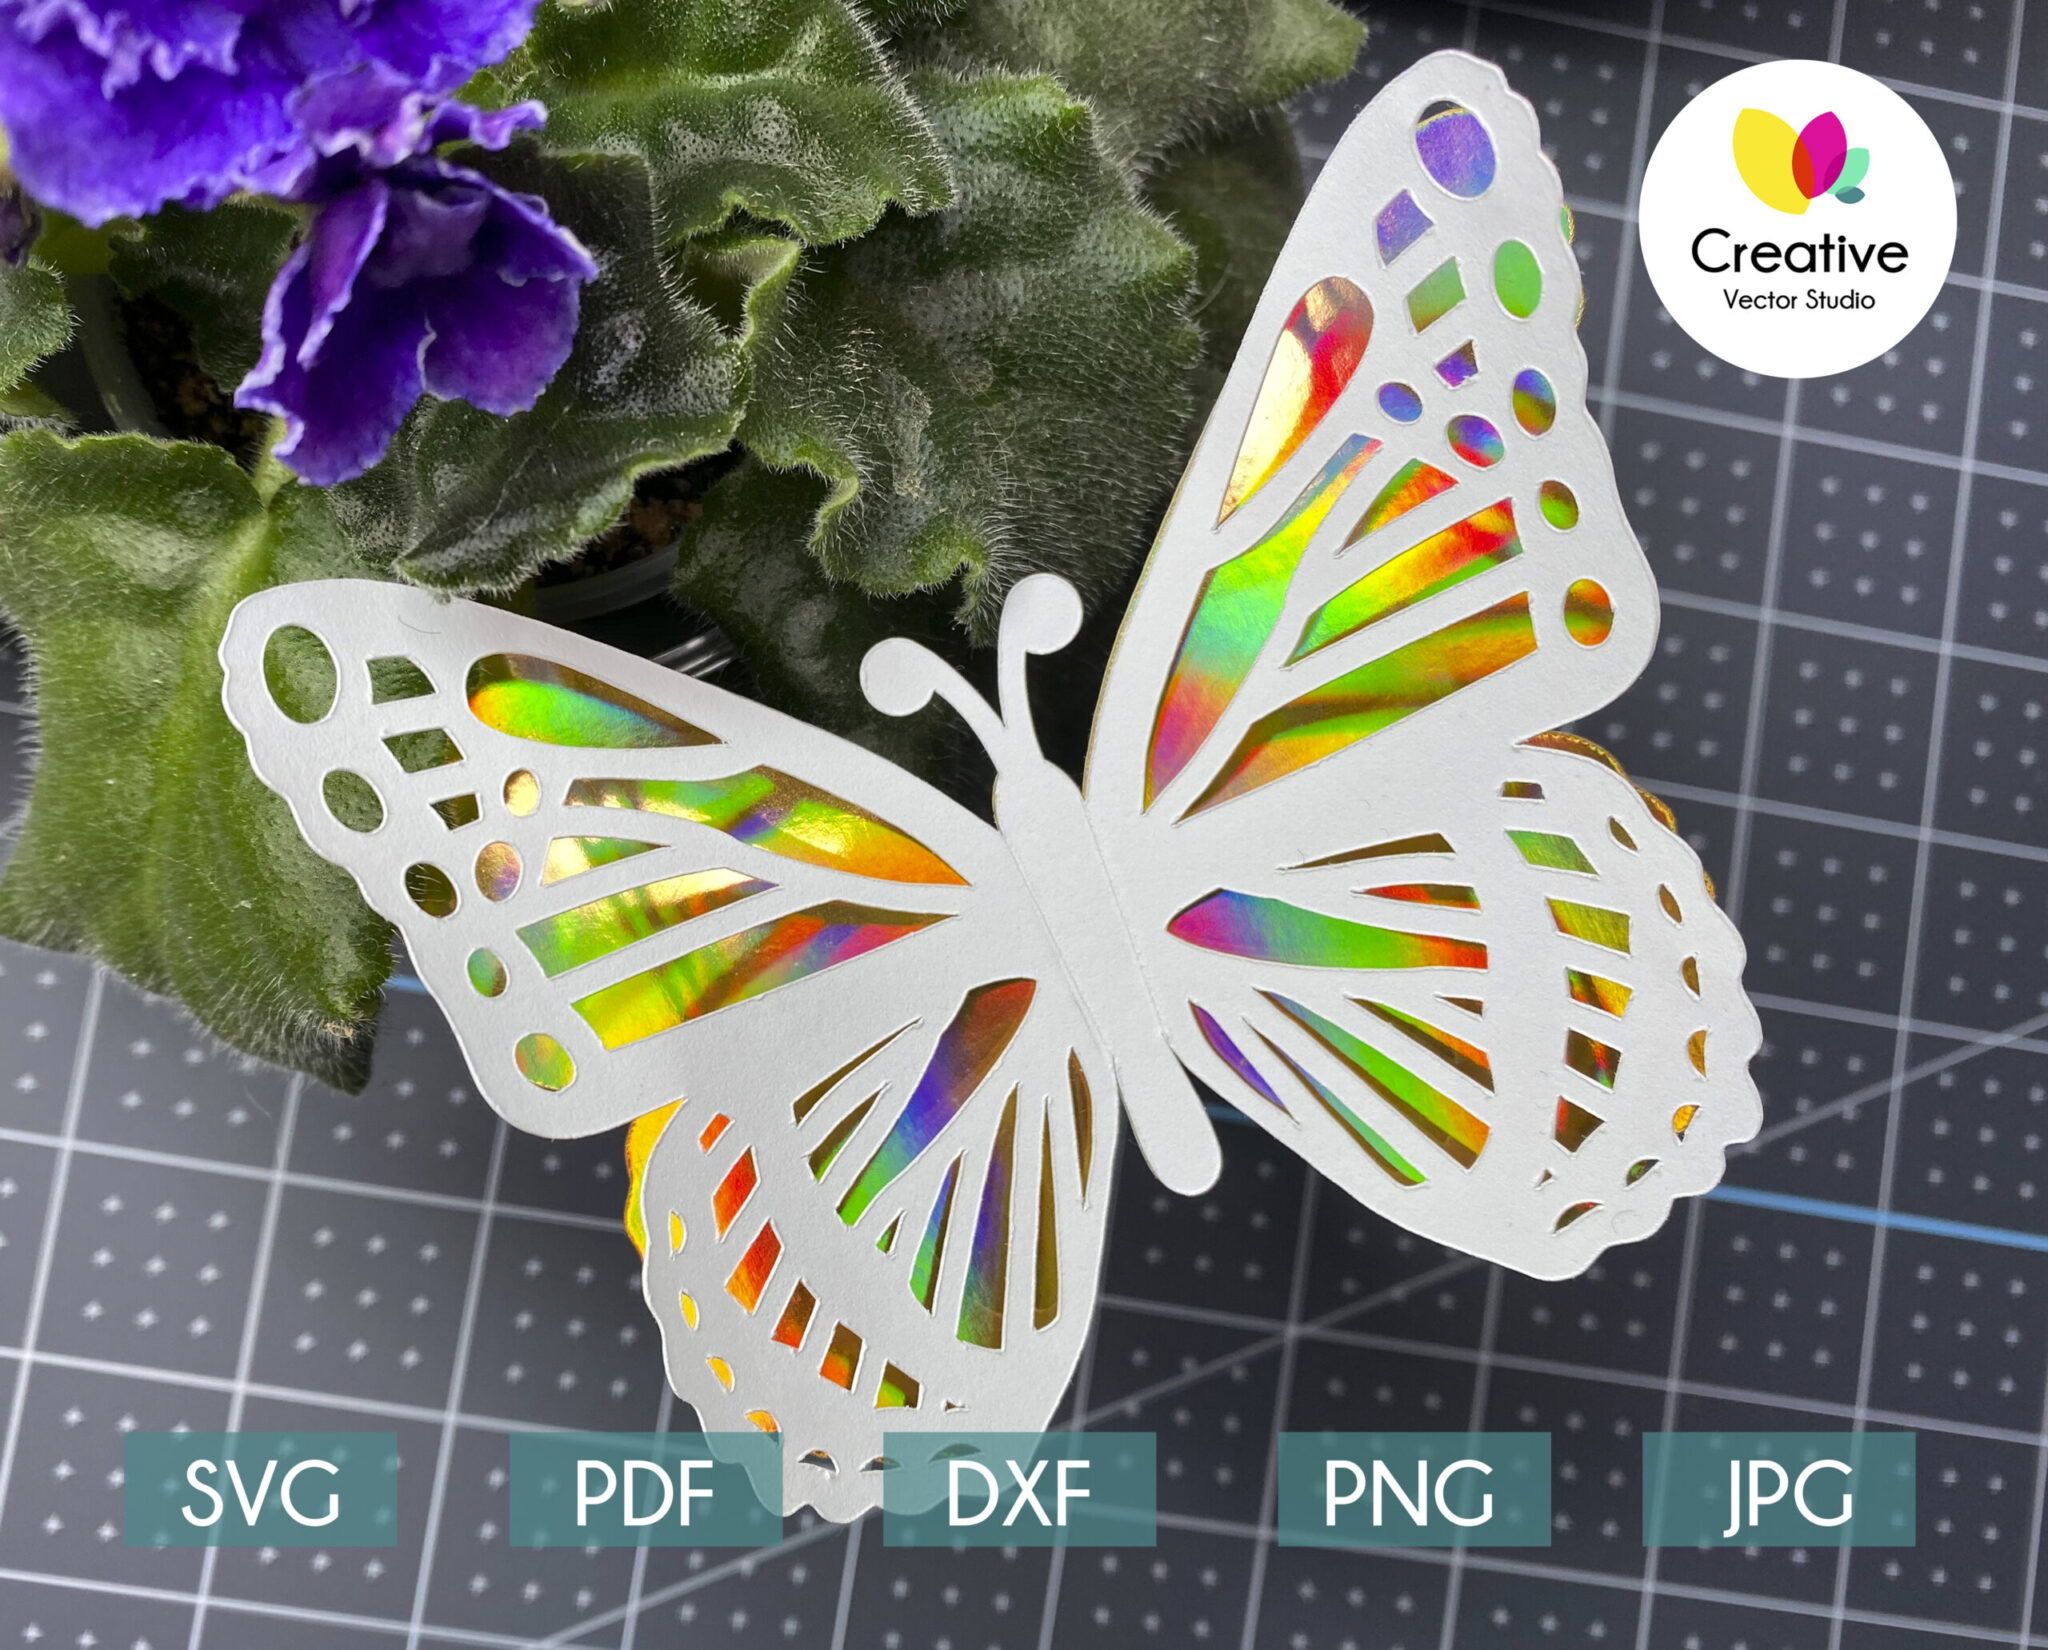 3D Butterfly SVG #1 Cutting Template | Creative Vector Studio